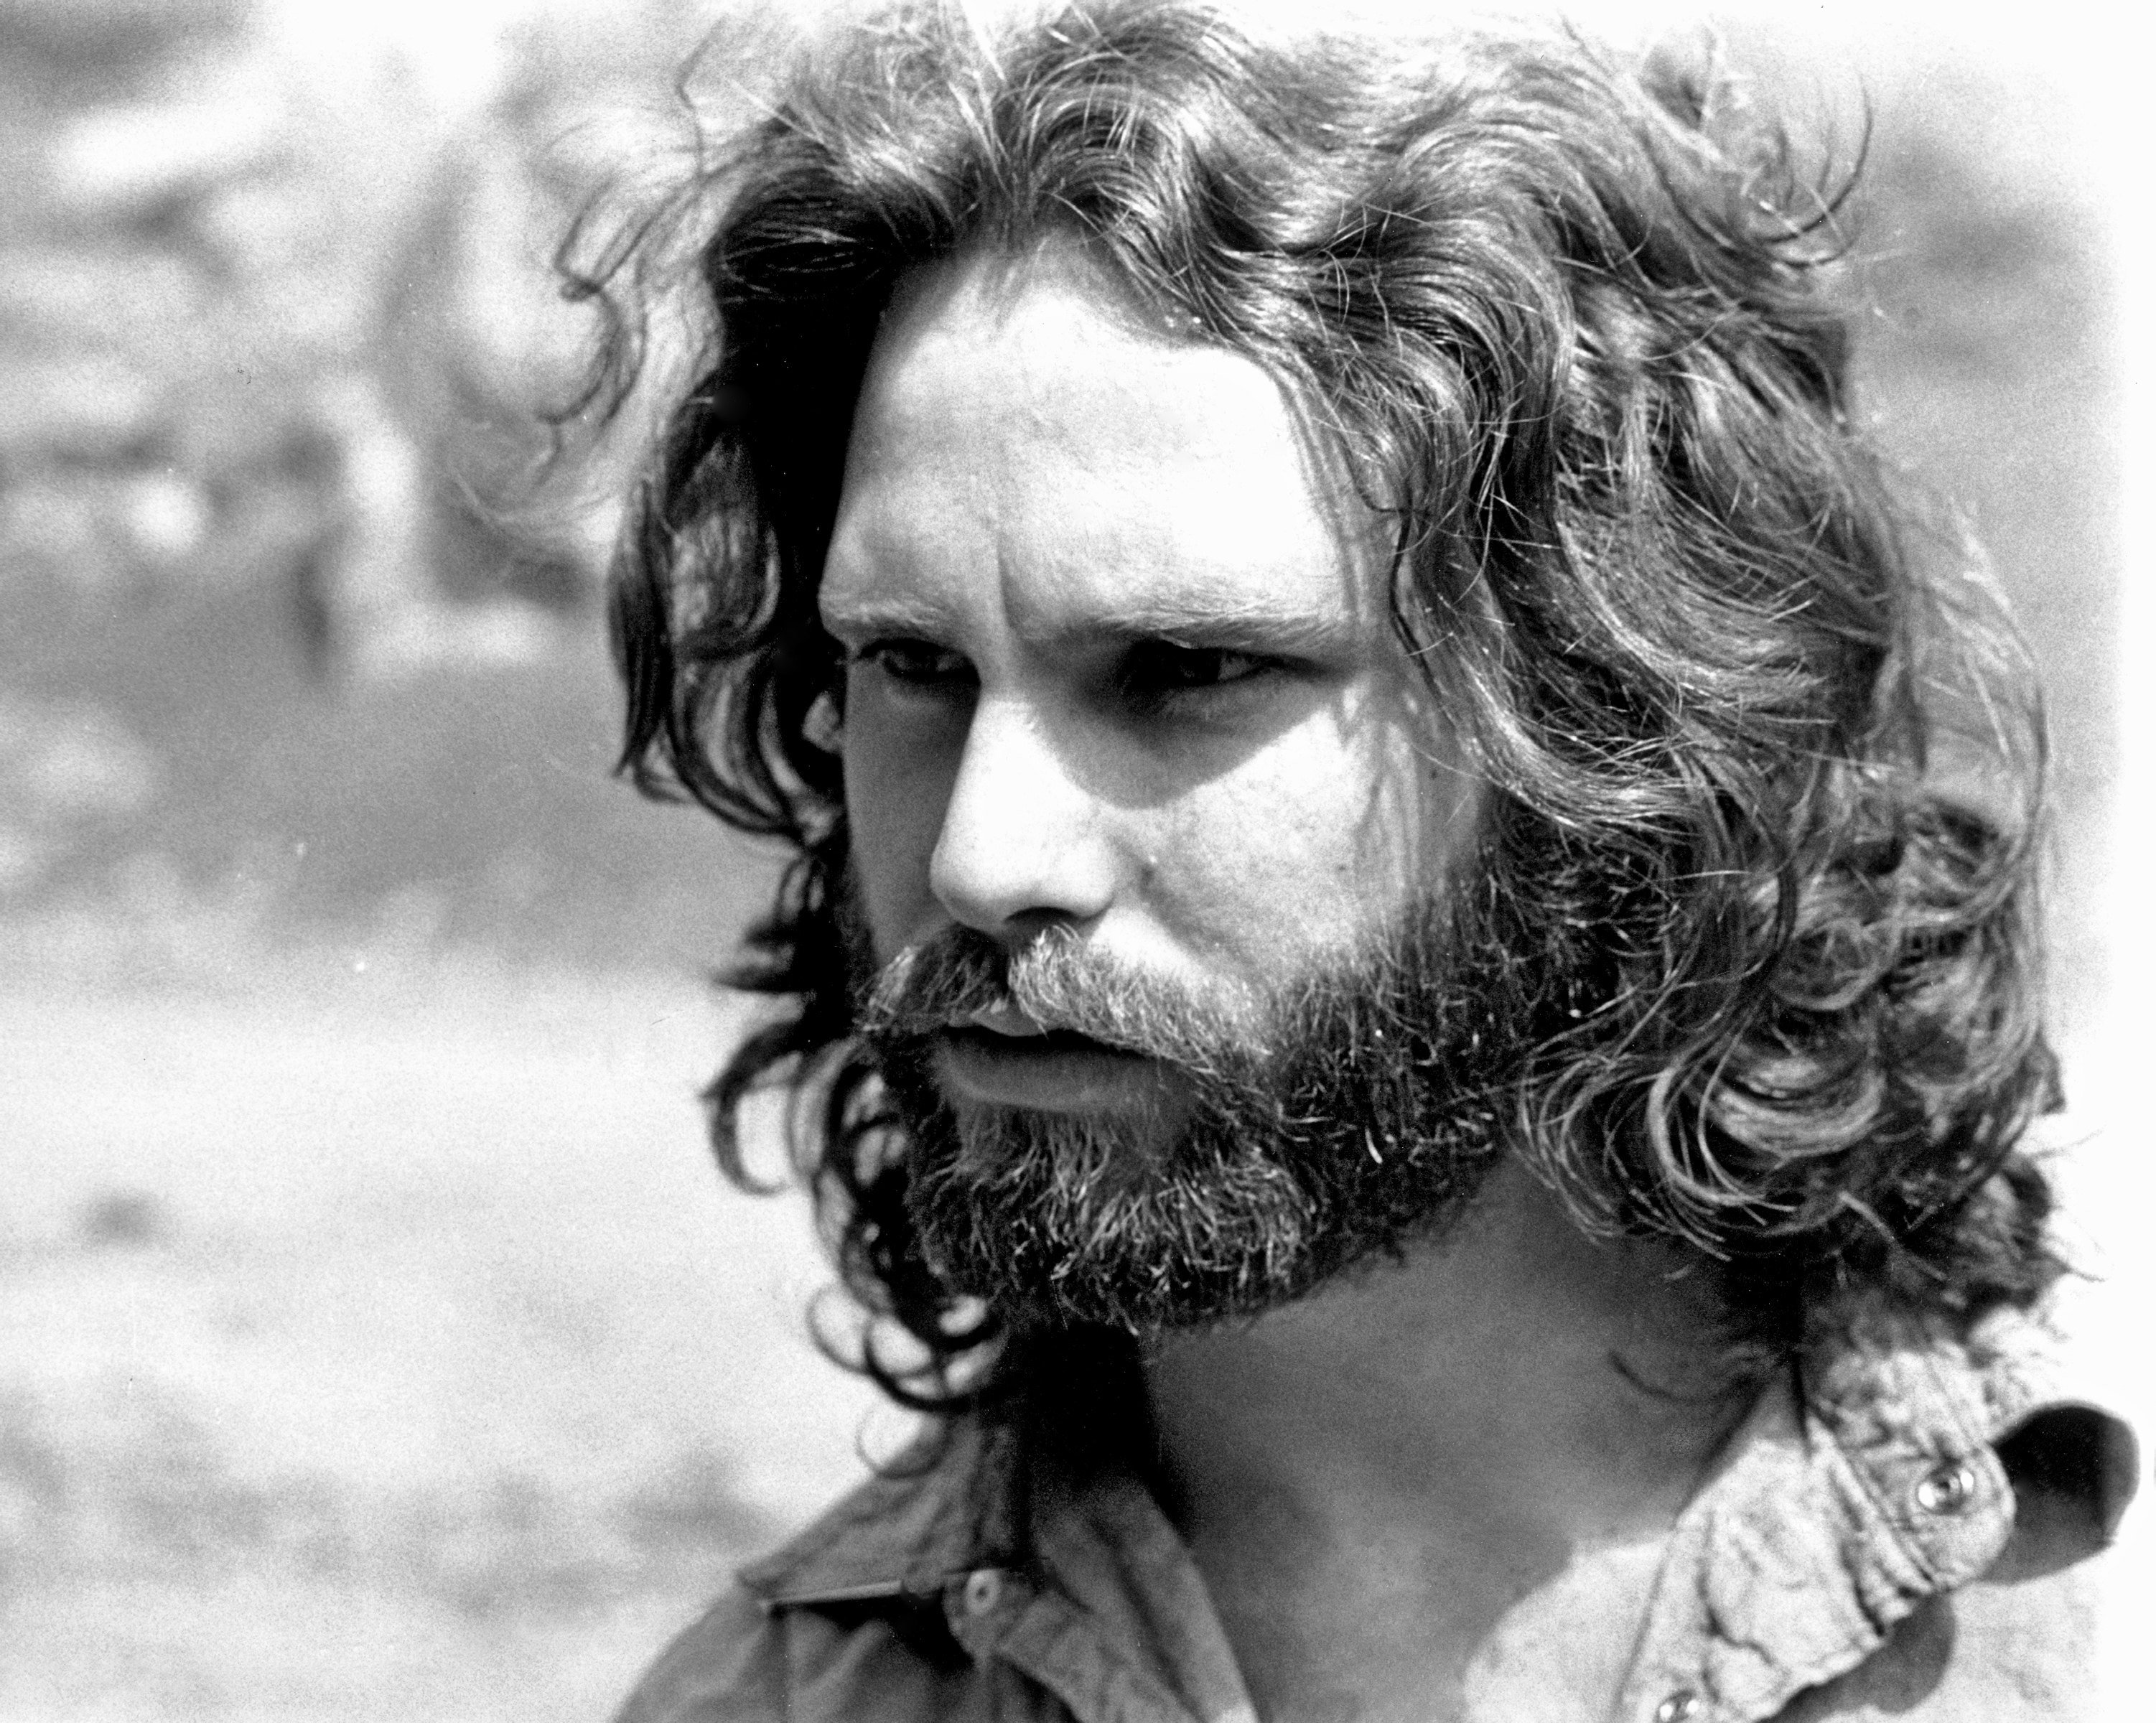 The Doors' Jim Morrison with a beard